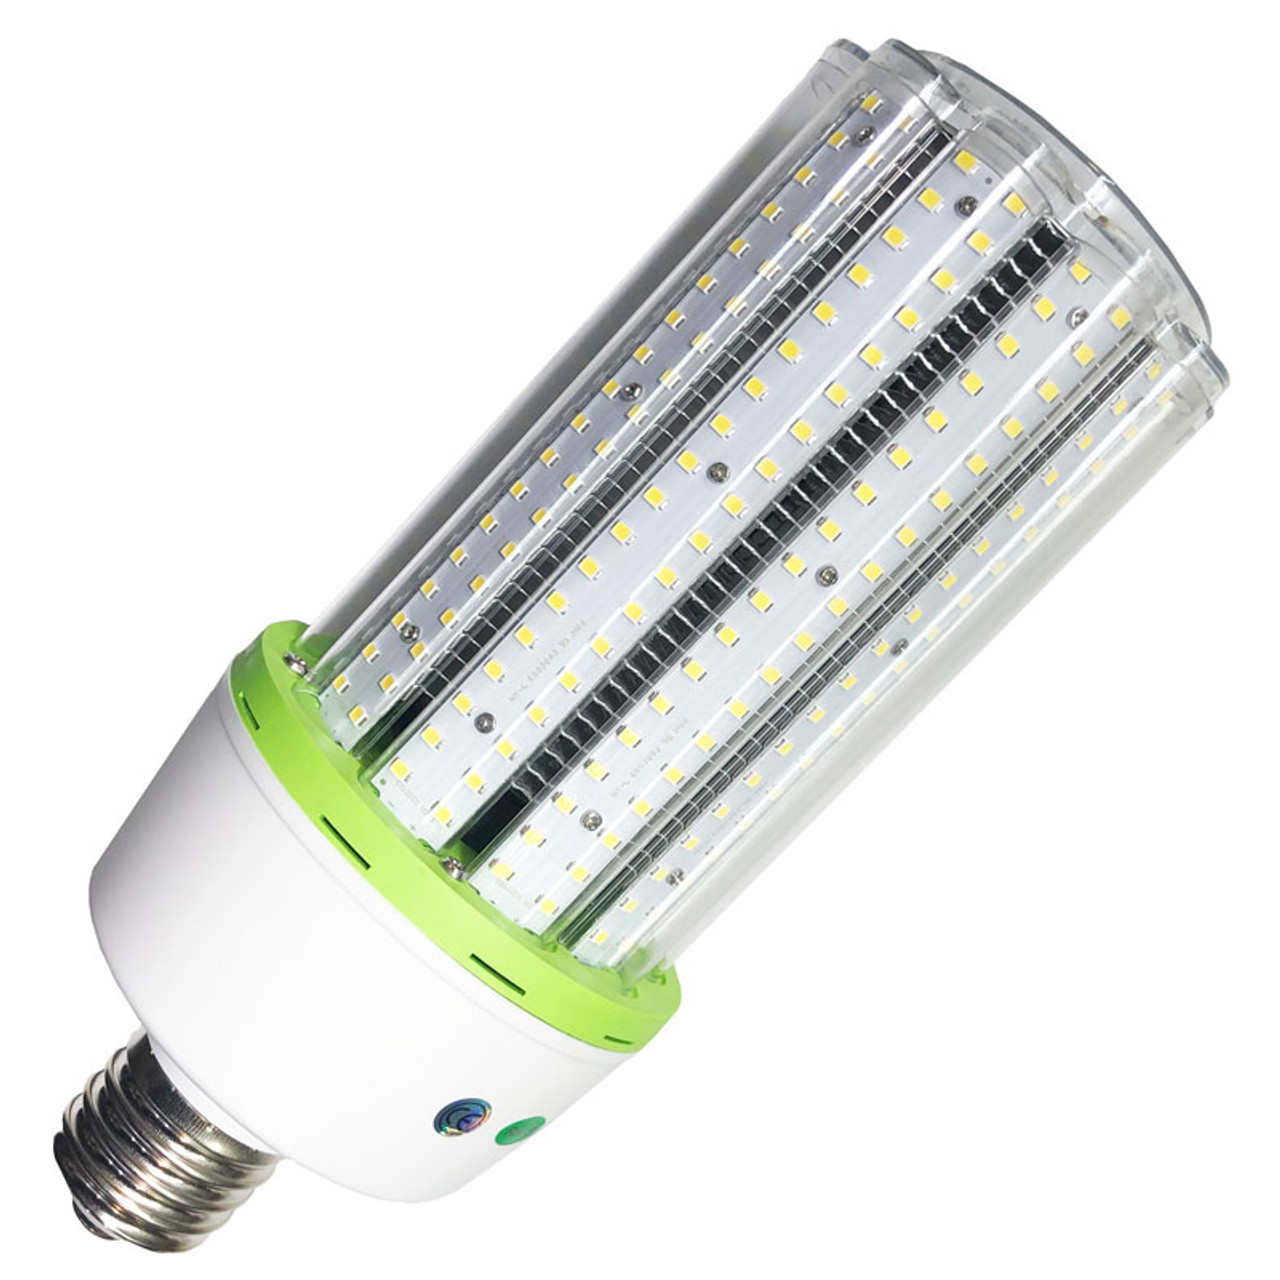 fokus Sommetider dynasti 60 Watt LED Corn Bulb Replaces 180 Watt HID, 7800 Lumen, IP 64, DLC  Certified, ETL Listed, 5 Year Warranty - LED Global Supply